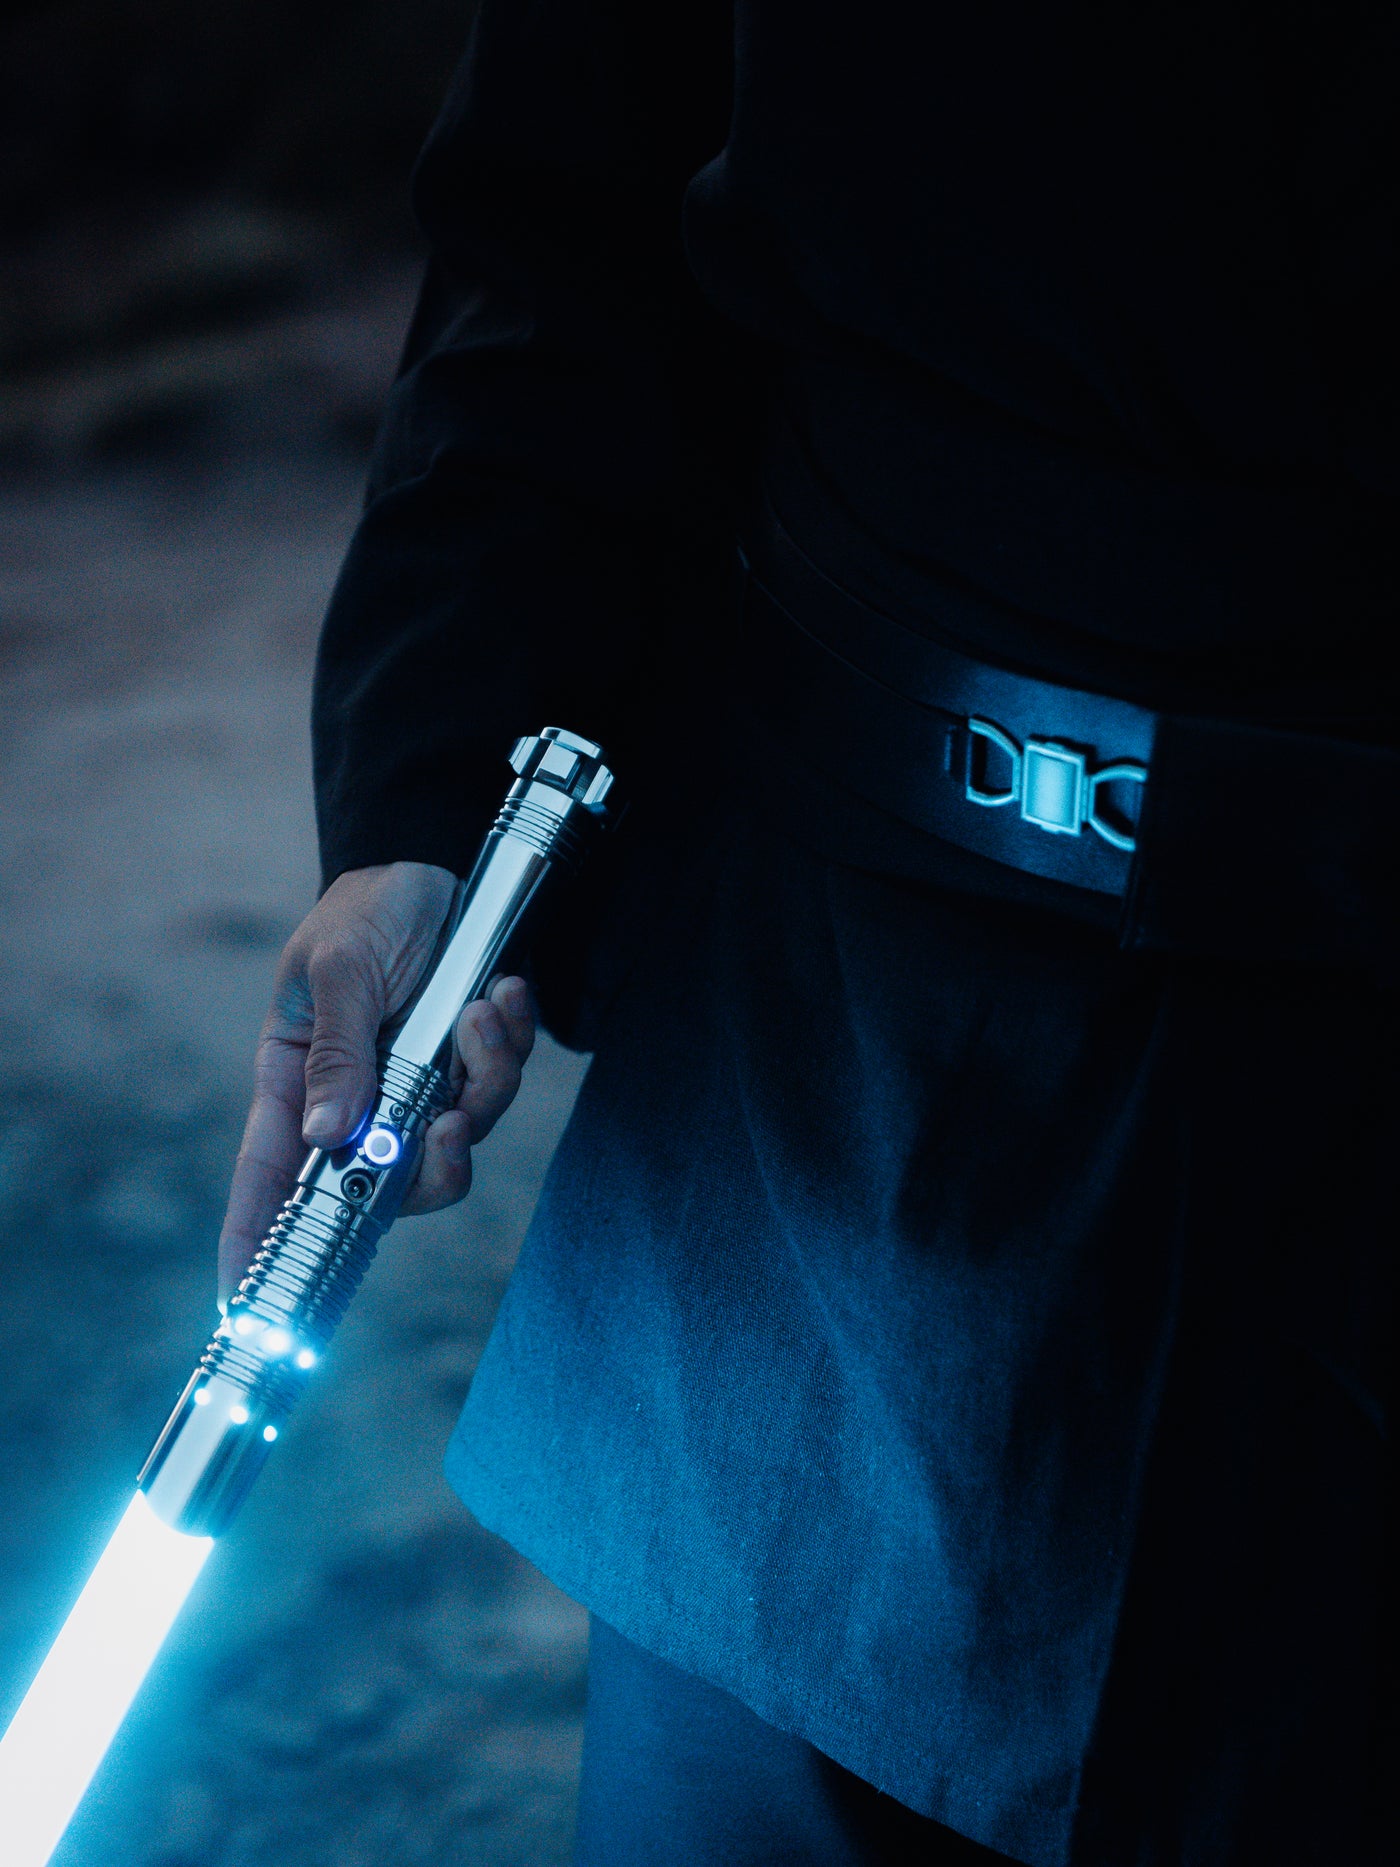 Silverlight - KenJo Sabers - Premium RGB Base Lit - Star Wars Lightsaber replica Jedi Sith - Best sabershop Europe - Nederland light sabers kopen -